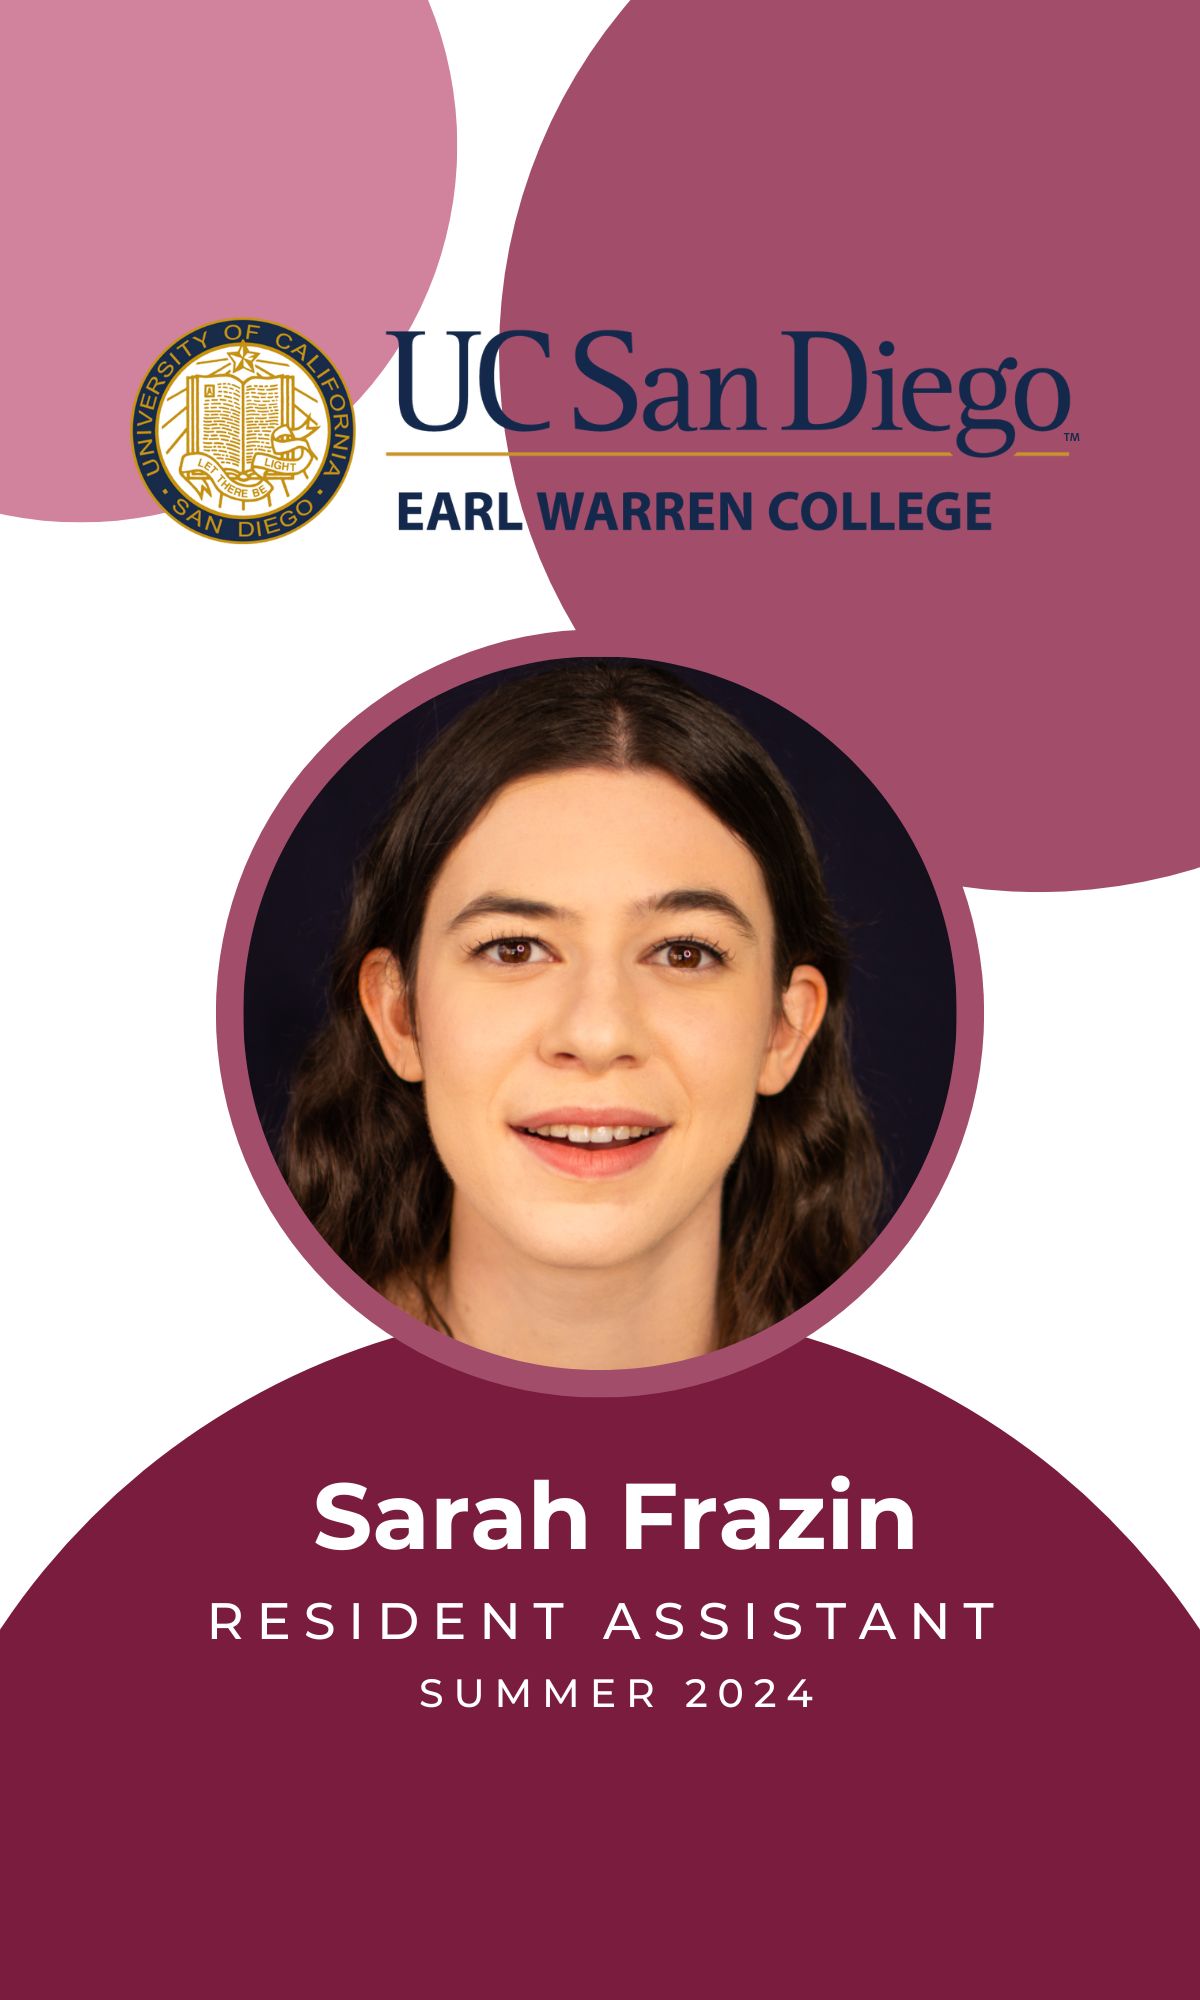 Sarah Frazin